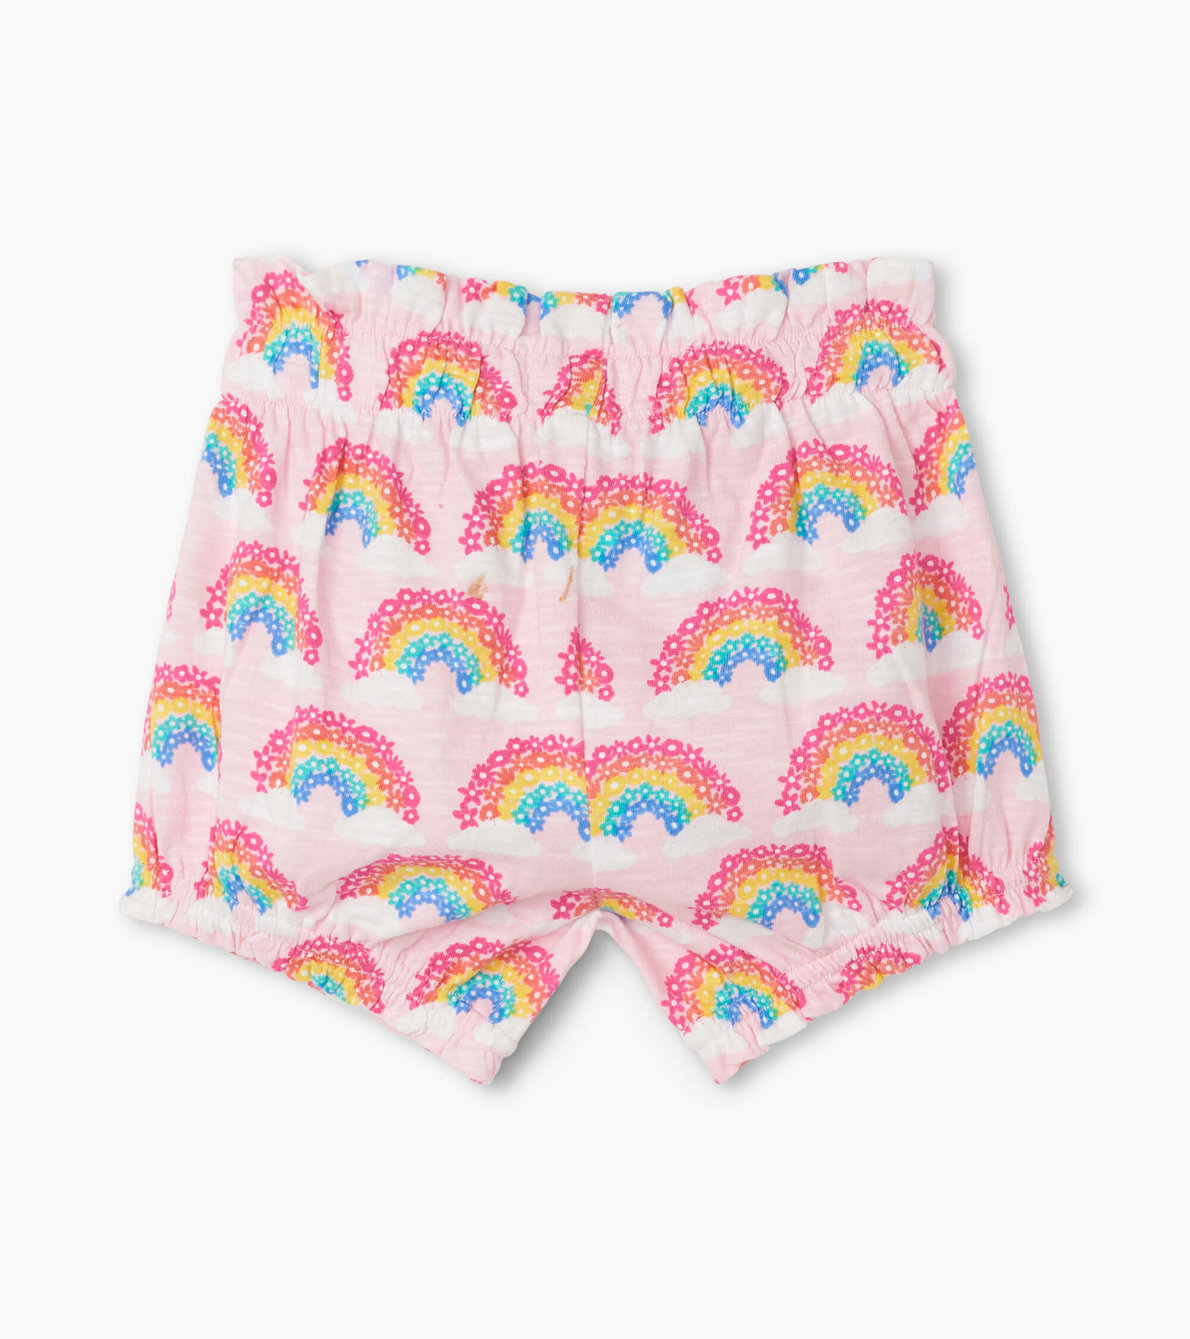 View larger image of Magical Rainbows Baby Shorts